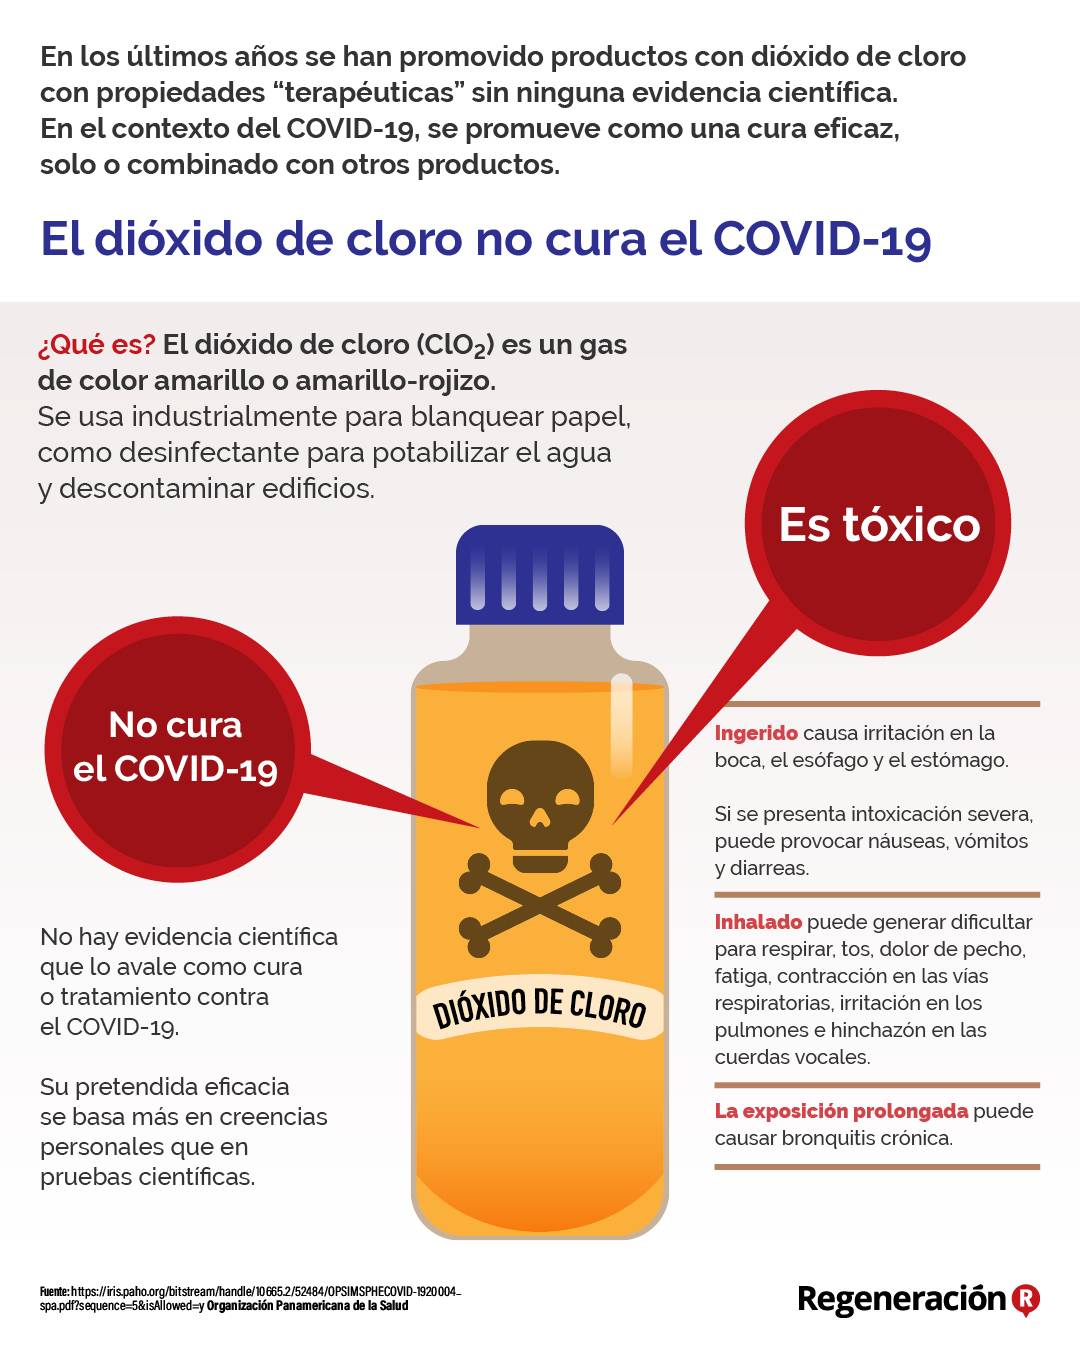 El dióxido de cloro no cura el Covid-19